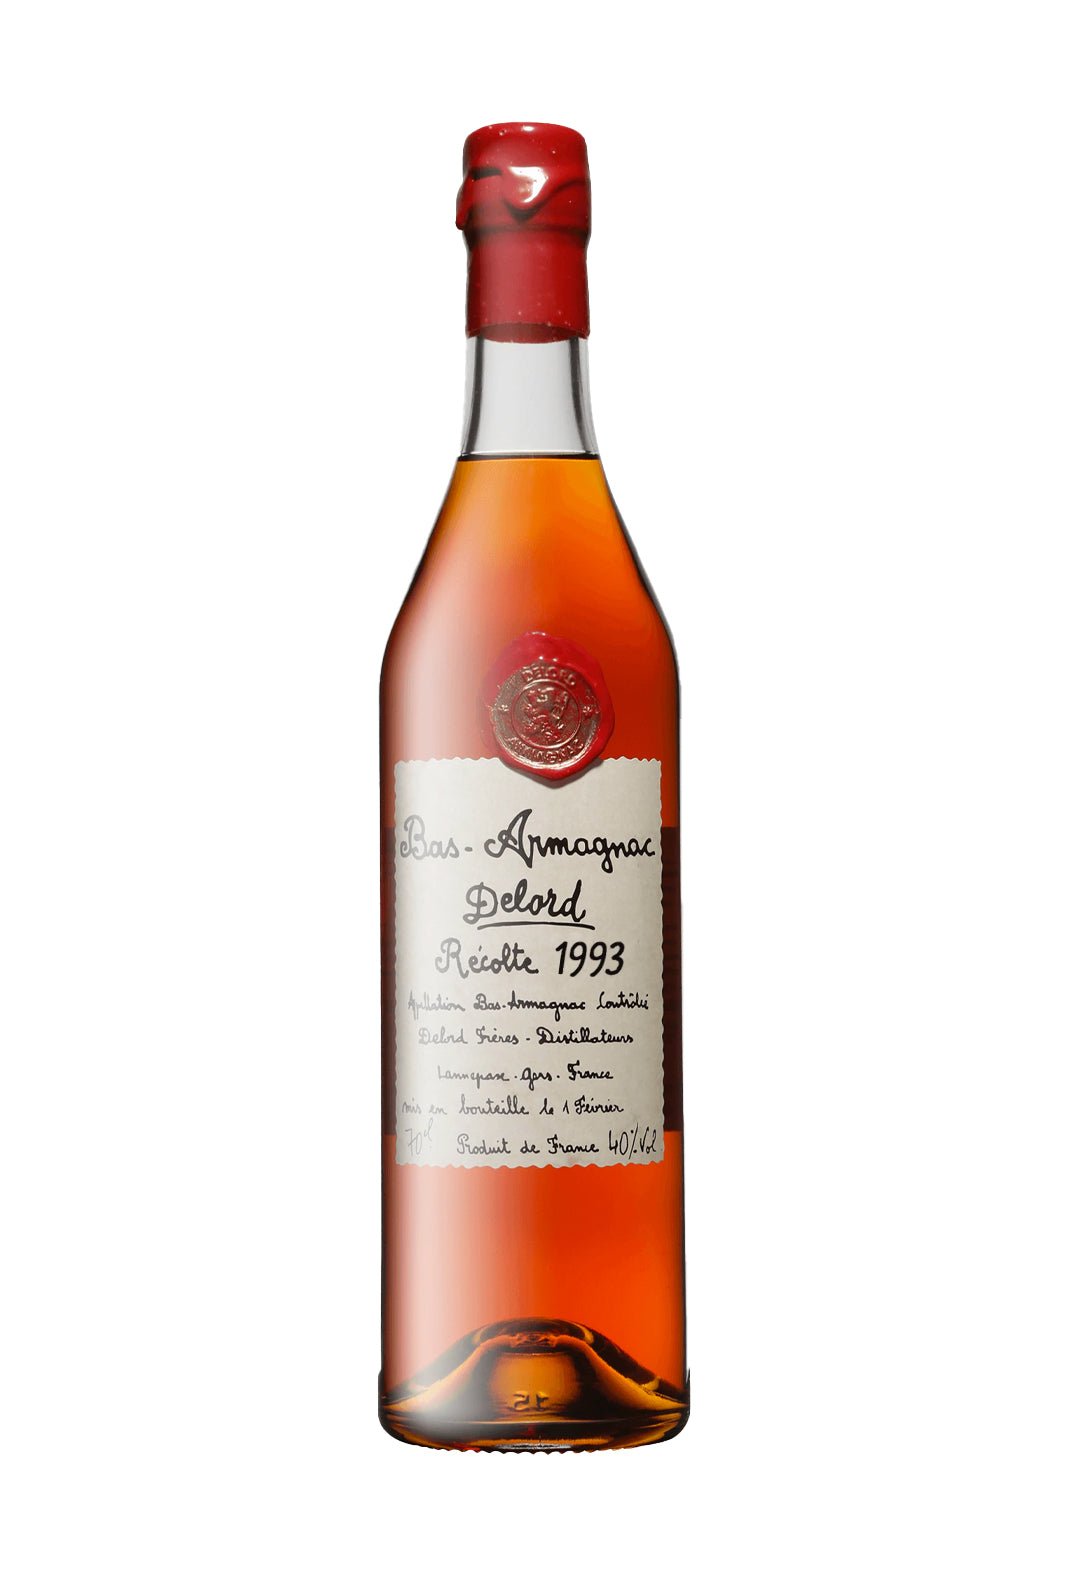 Delord Bas Armagnac 1993 40% 700ml | Brandy | Shop online at Spirits of France